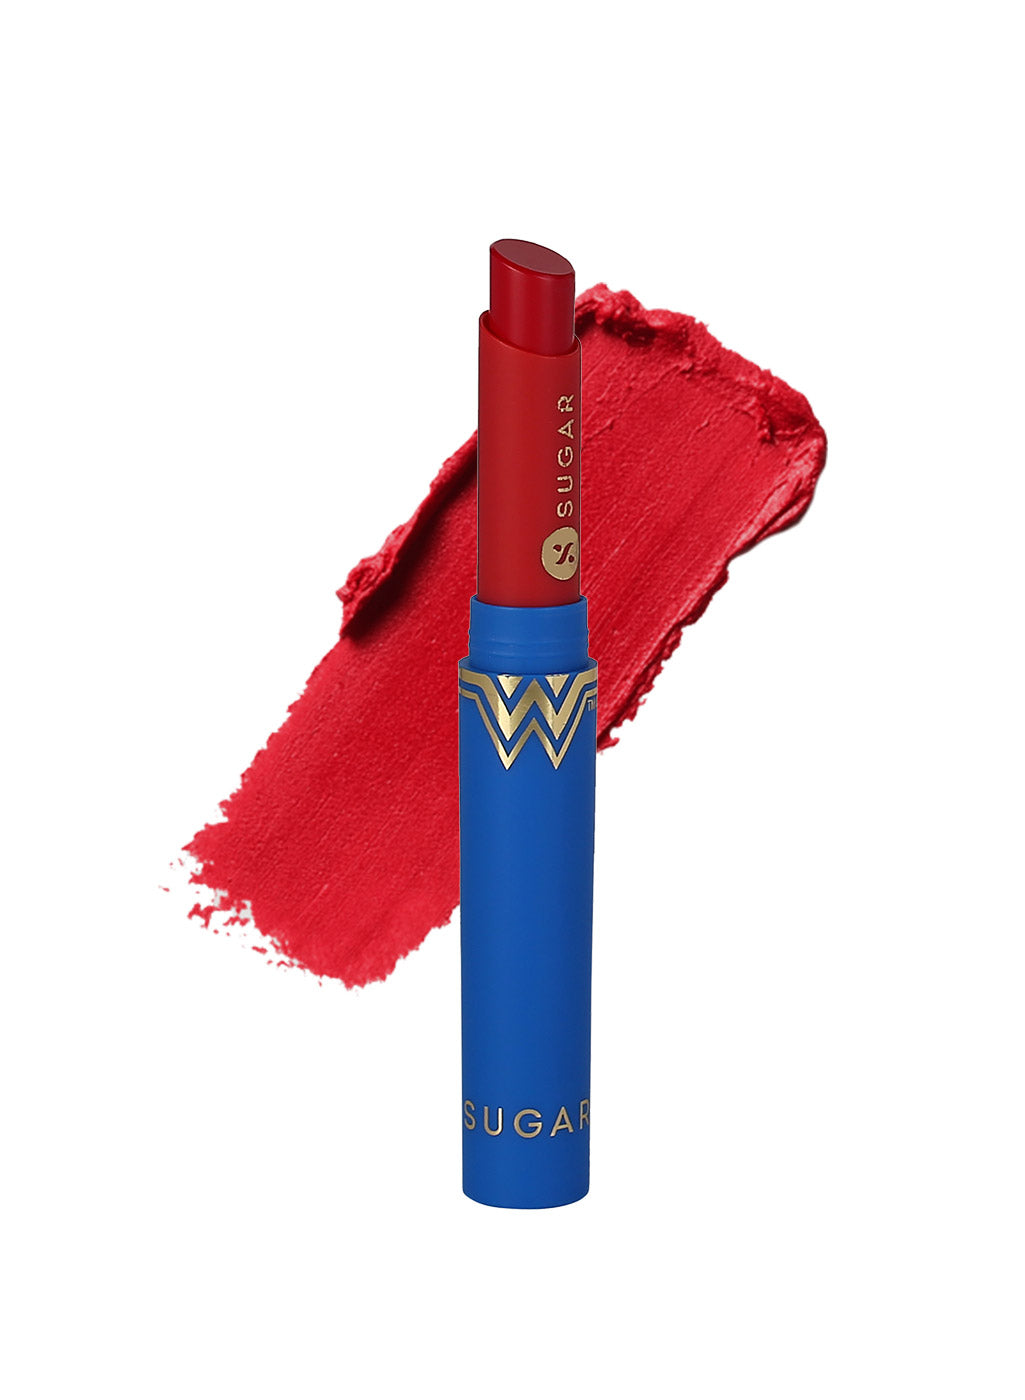 SUGAR Cosmetics Wonder Woman Creamy Matte Lipstick - 08 World Ruler (Chilli Red)